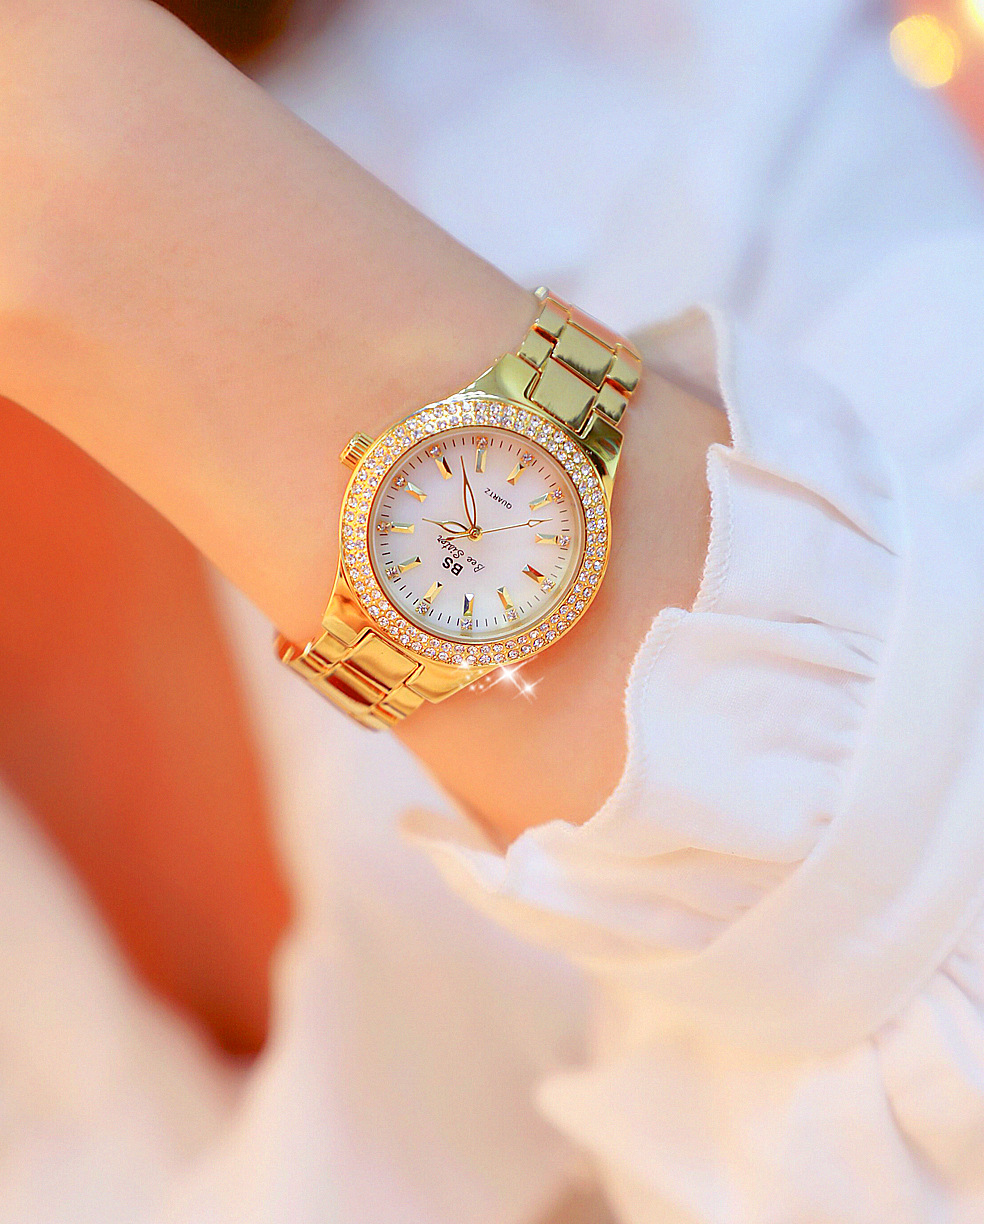 BS Watch 1258 Ladies Top Brand Luxury Wrist Watches Dress Gold Women Crystal Diamond Stainless Steel Watch